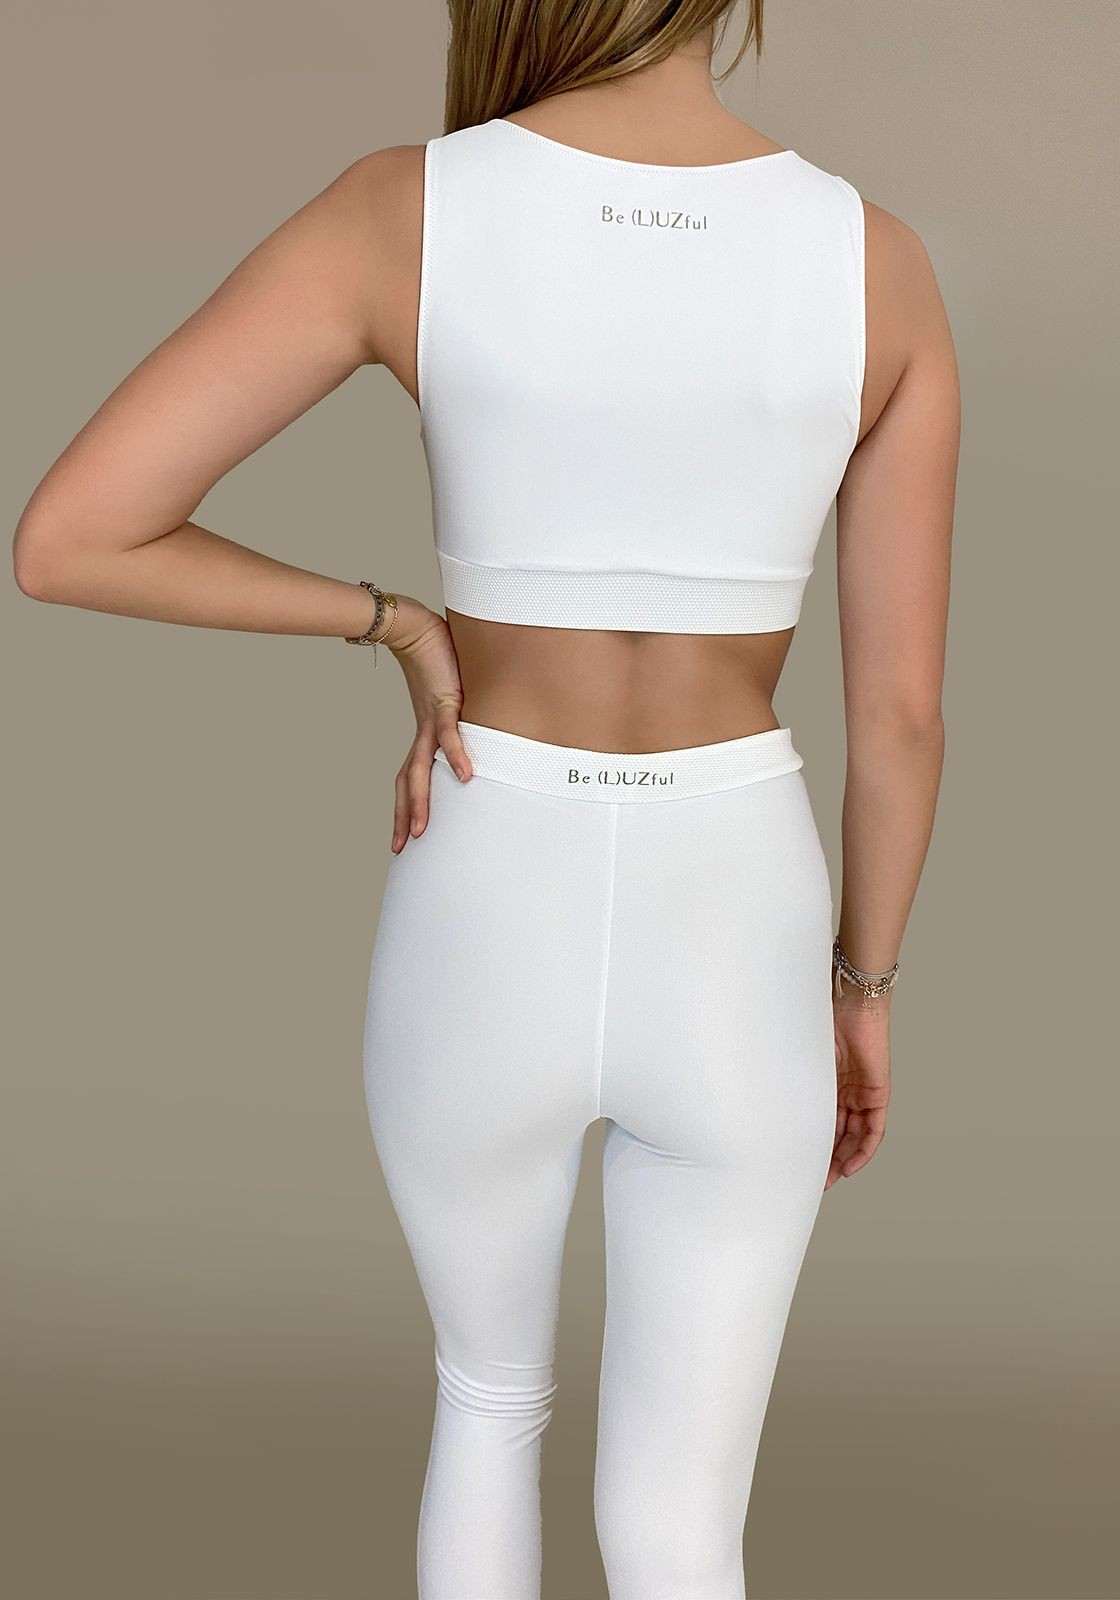 White yoga leggings - LUCILE Waist S Colour White Waist S Colour White